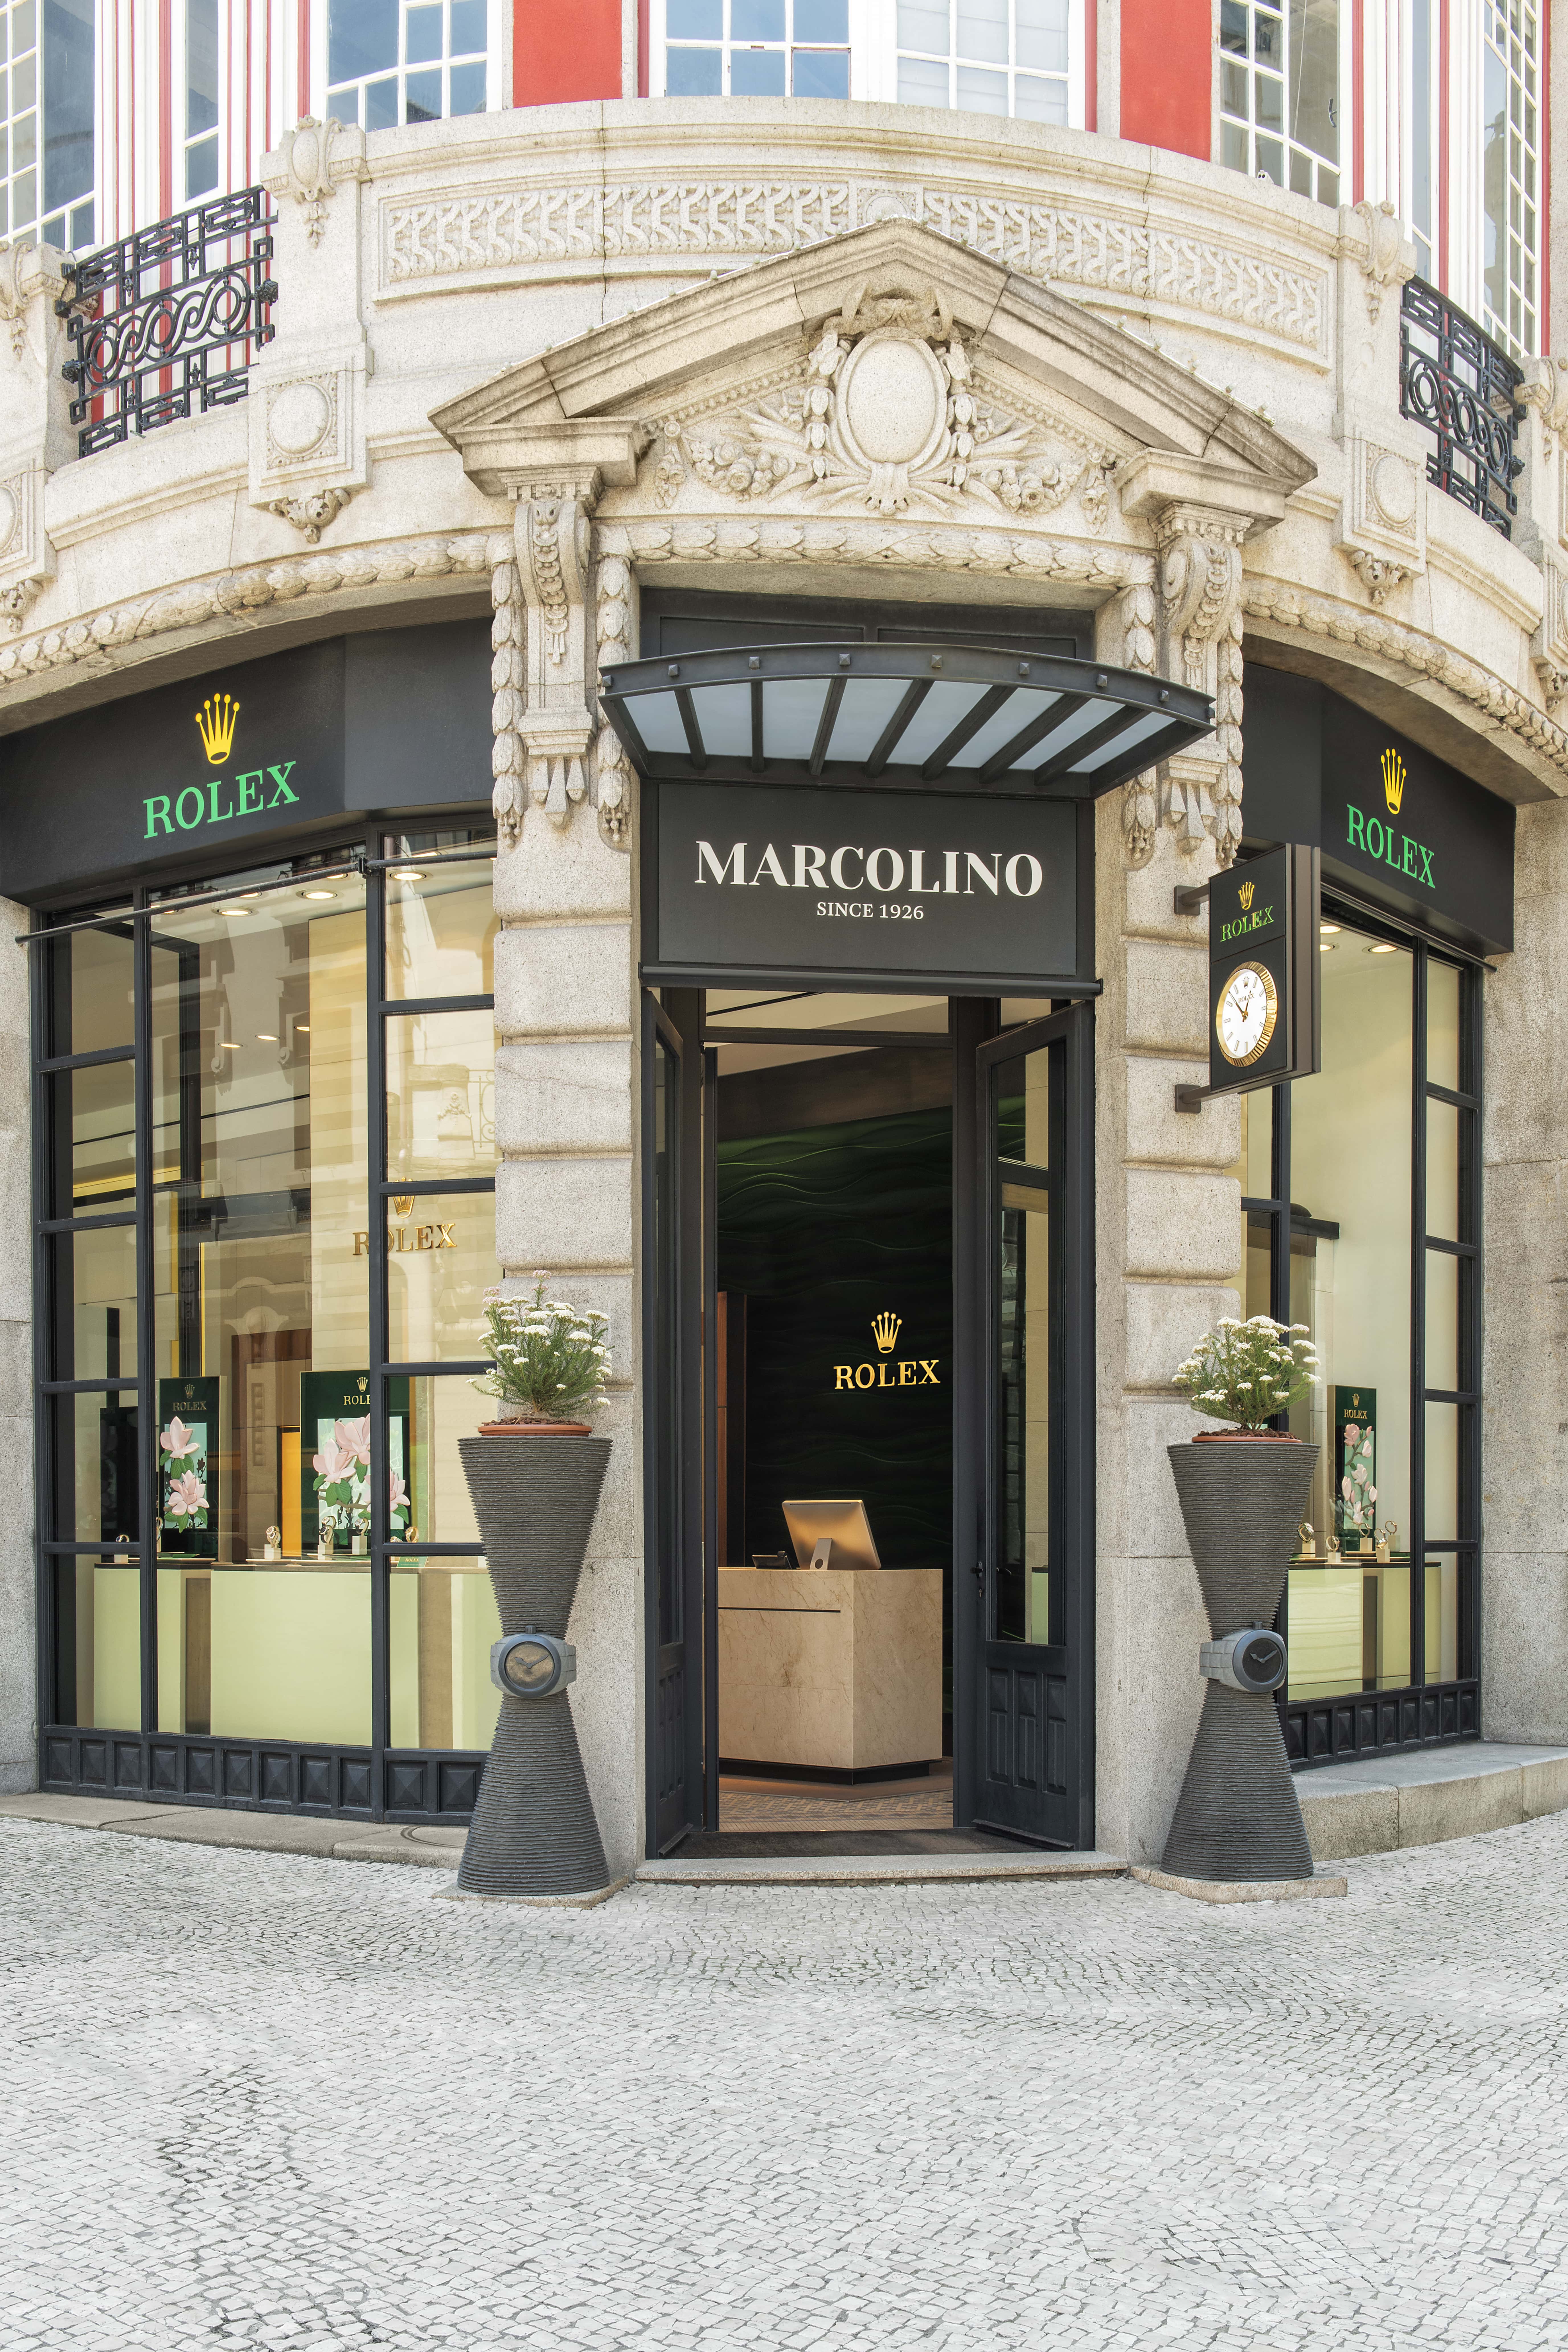 Images Marcolino - Rolex Official Retailer